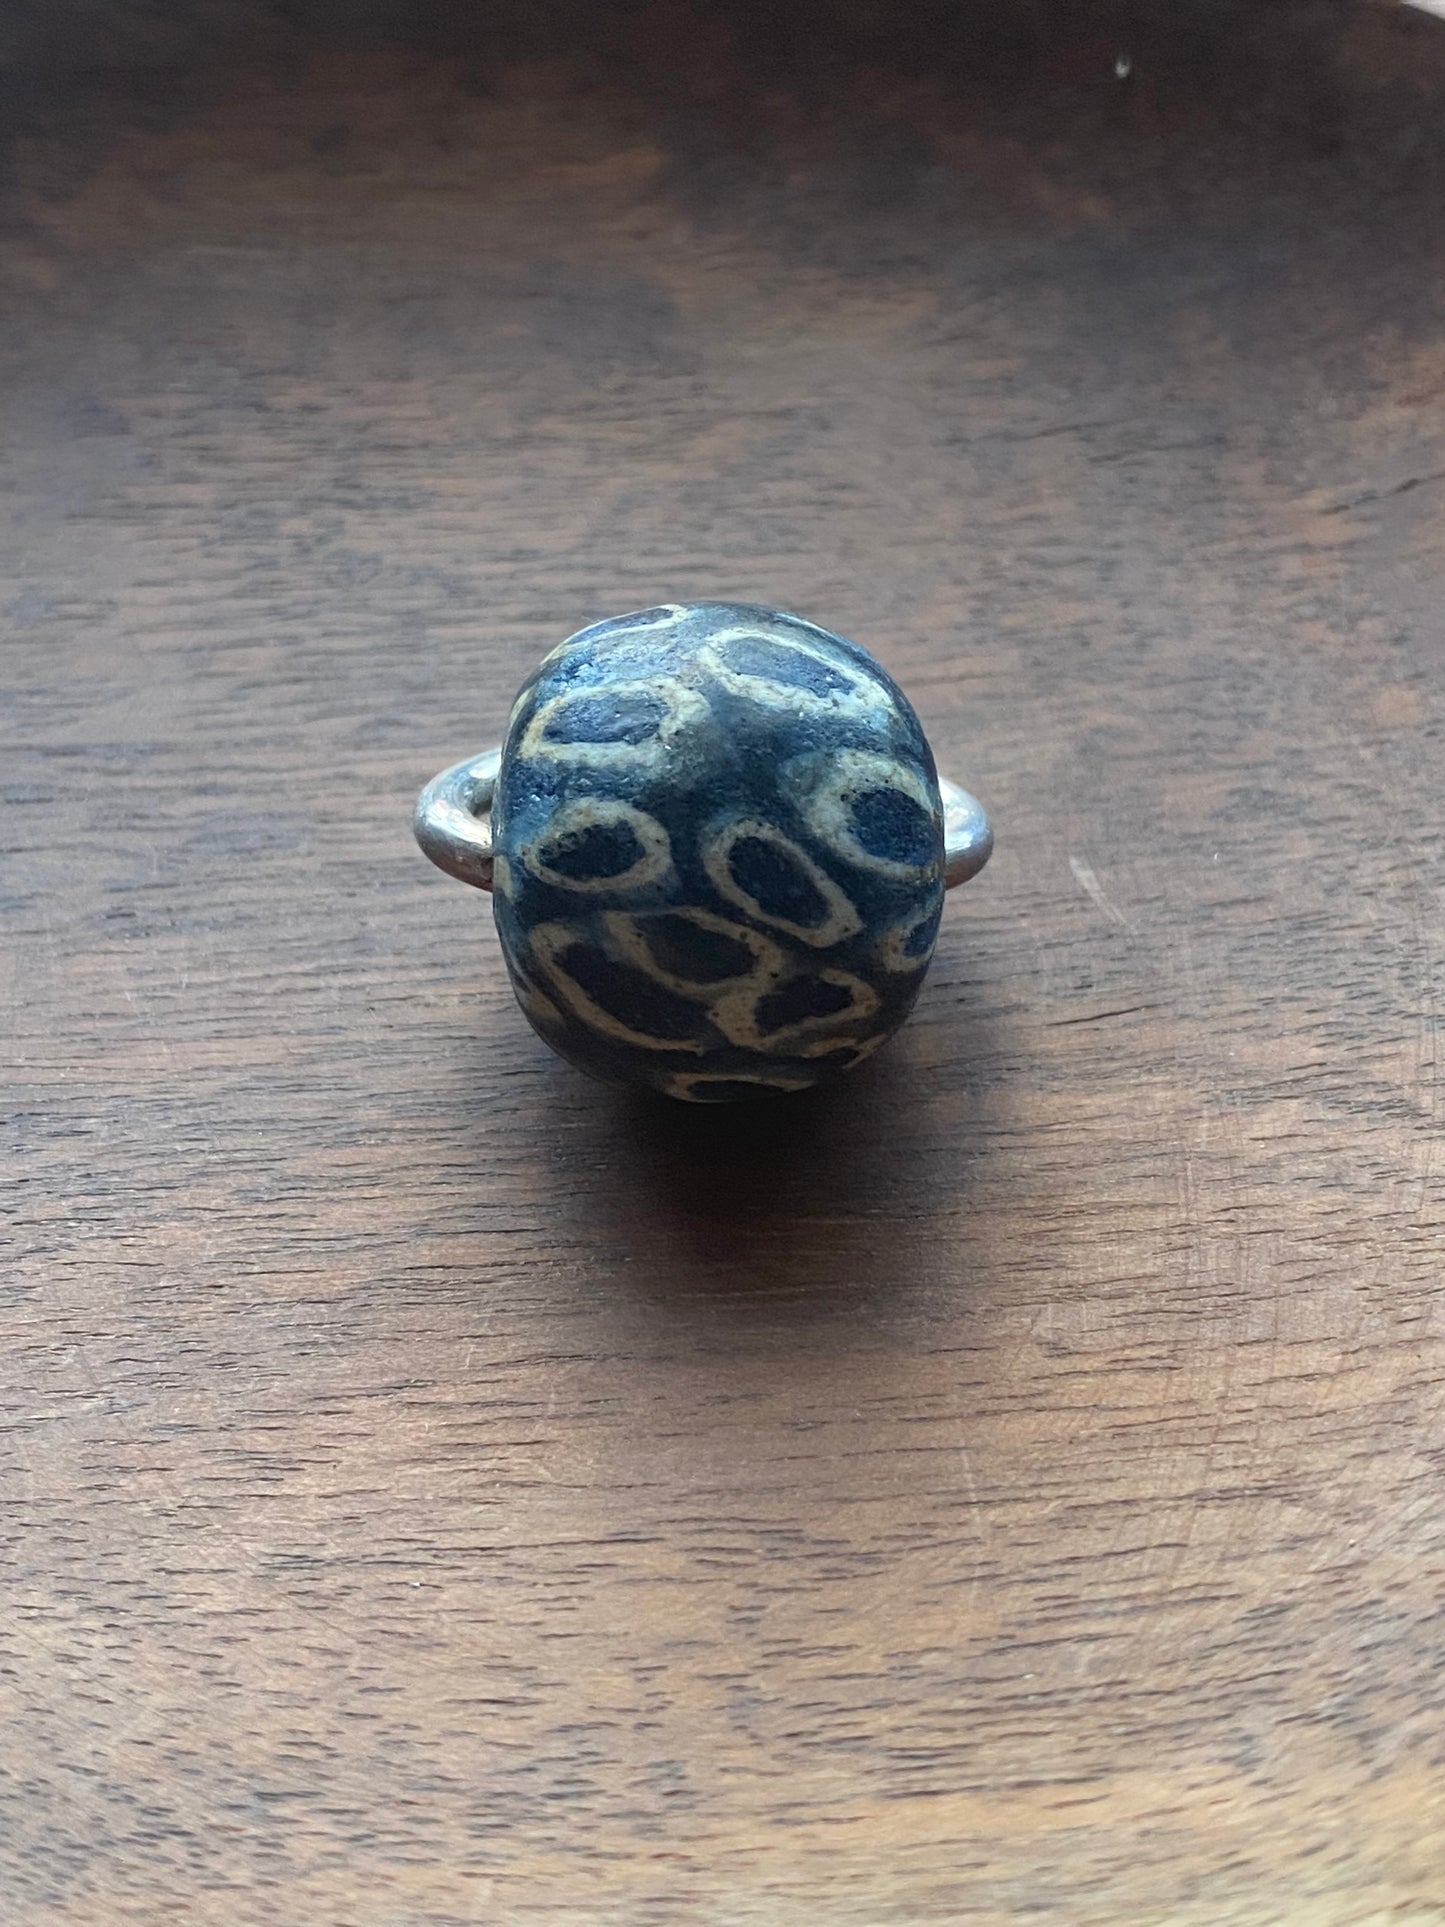 Antique / Ancient Millefiori Glass Trade Bead, Stratified Eye Bead, Swivel Fob Pendant